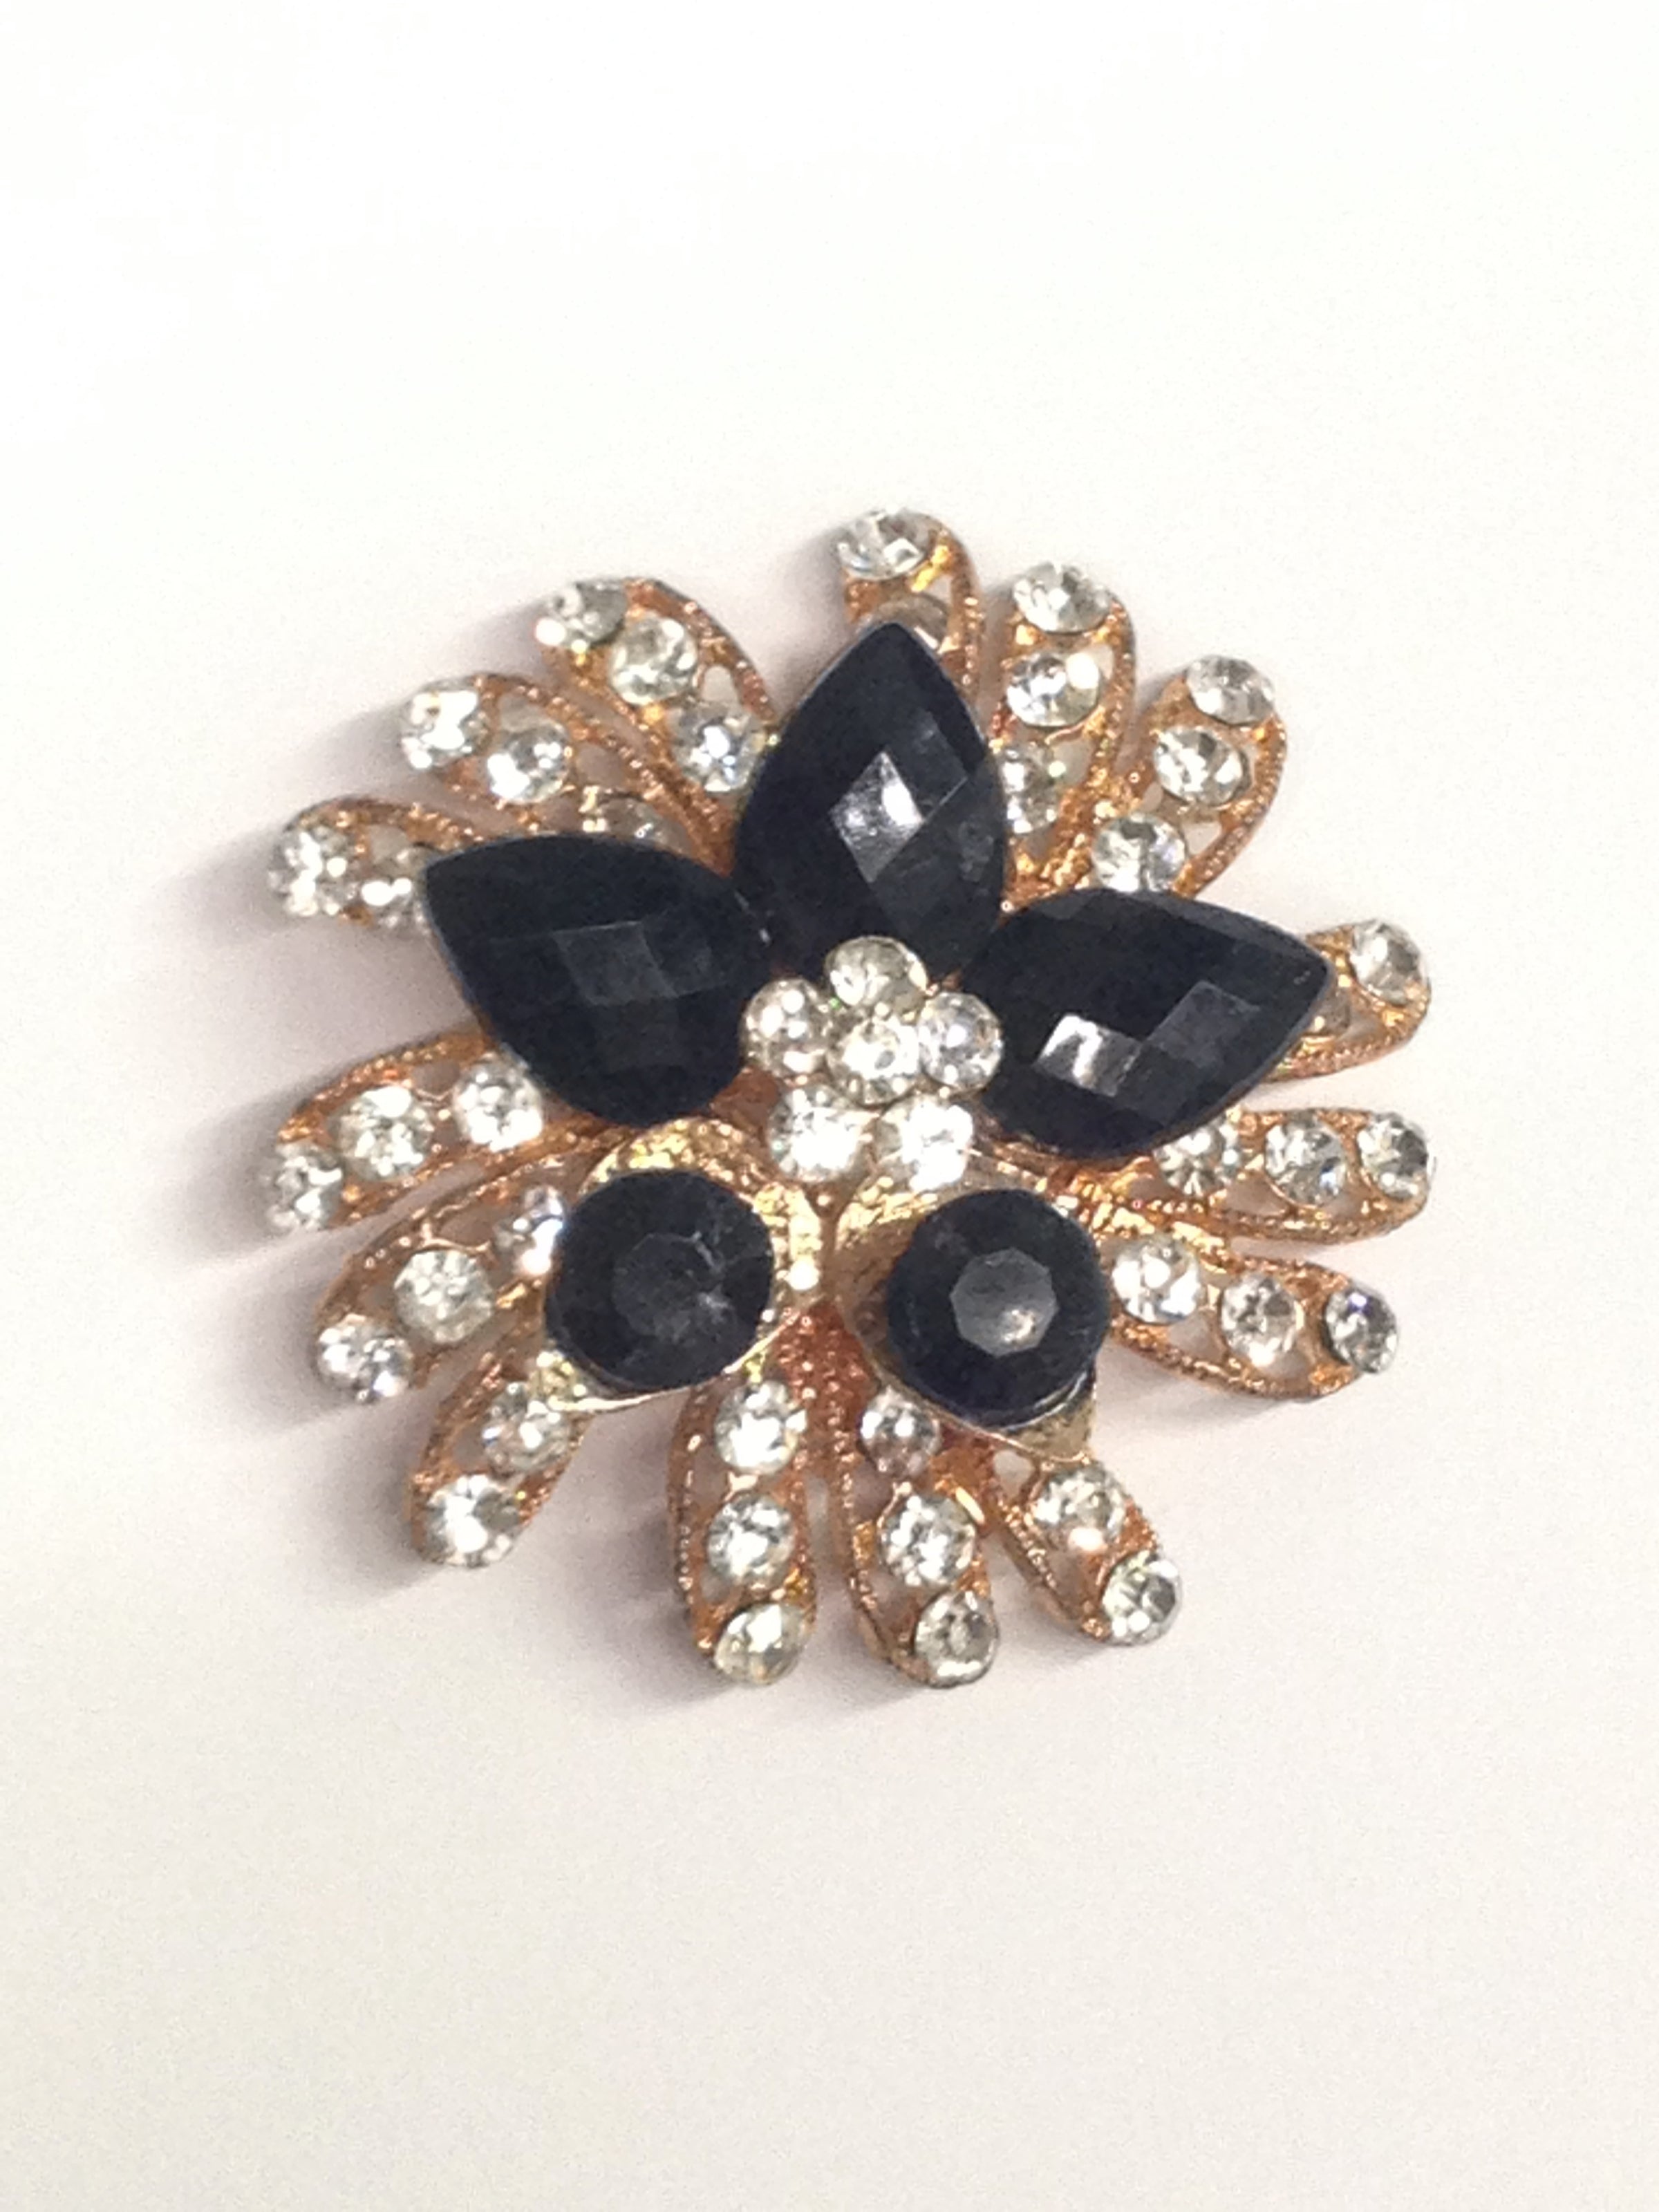 Black And Clear Rhinestone Round Star Flower Brooch Pin www.hersandhistreasures.com